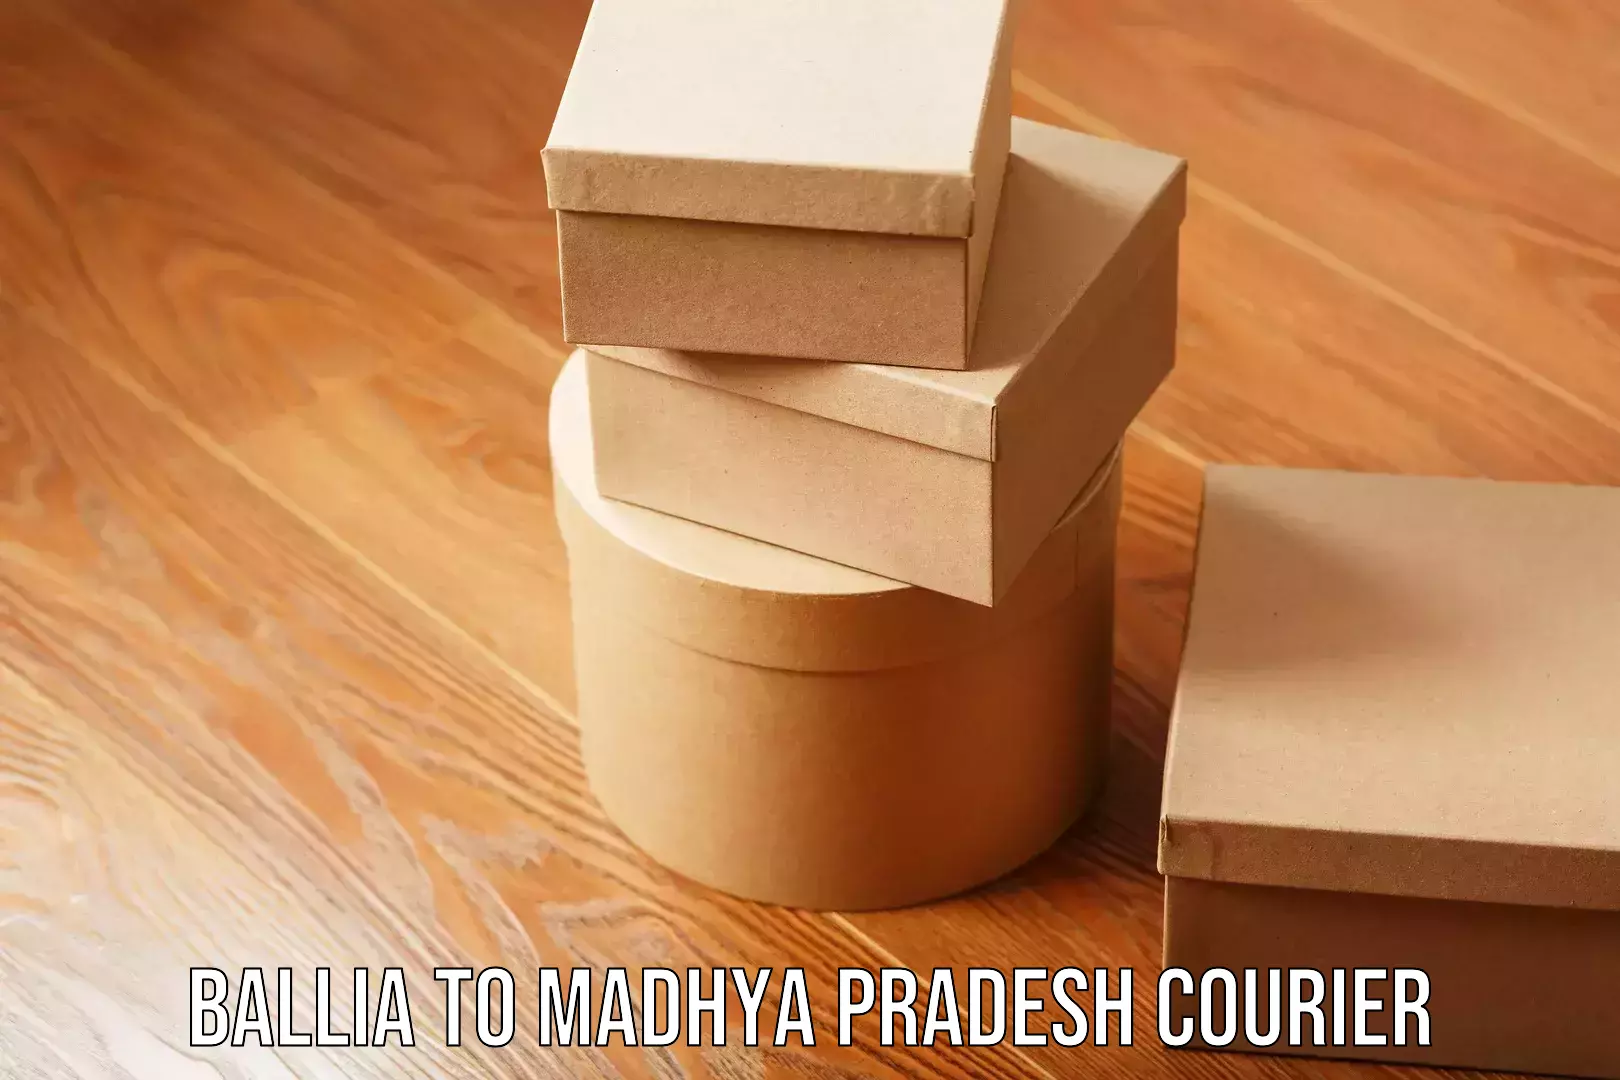 Advanced delivery network Ballia to Madhya Pradesh